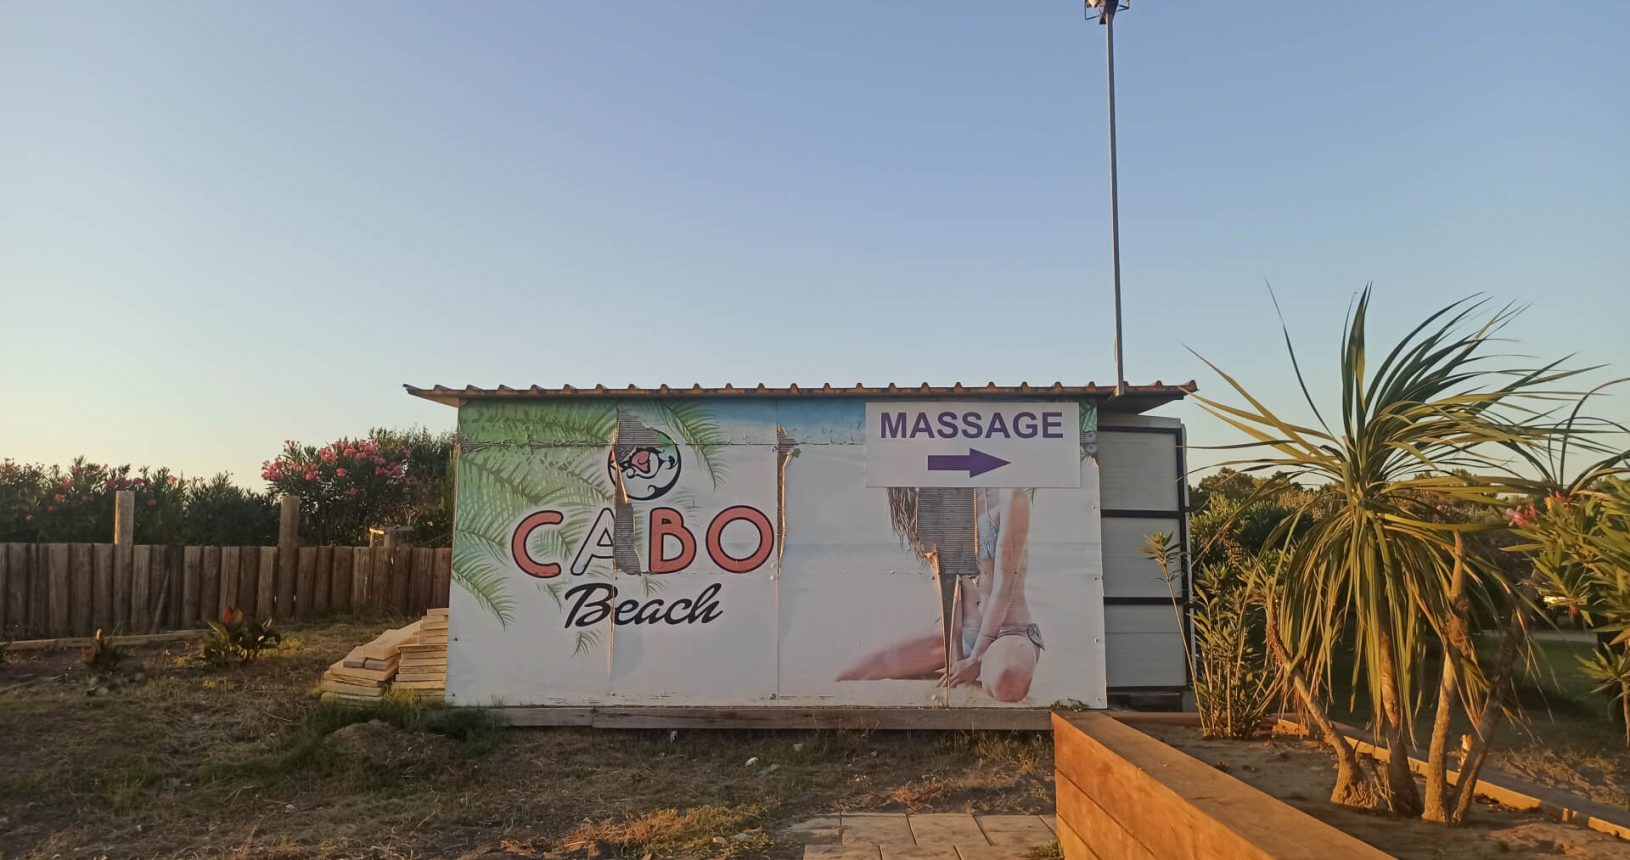 Cabo Beach massage